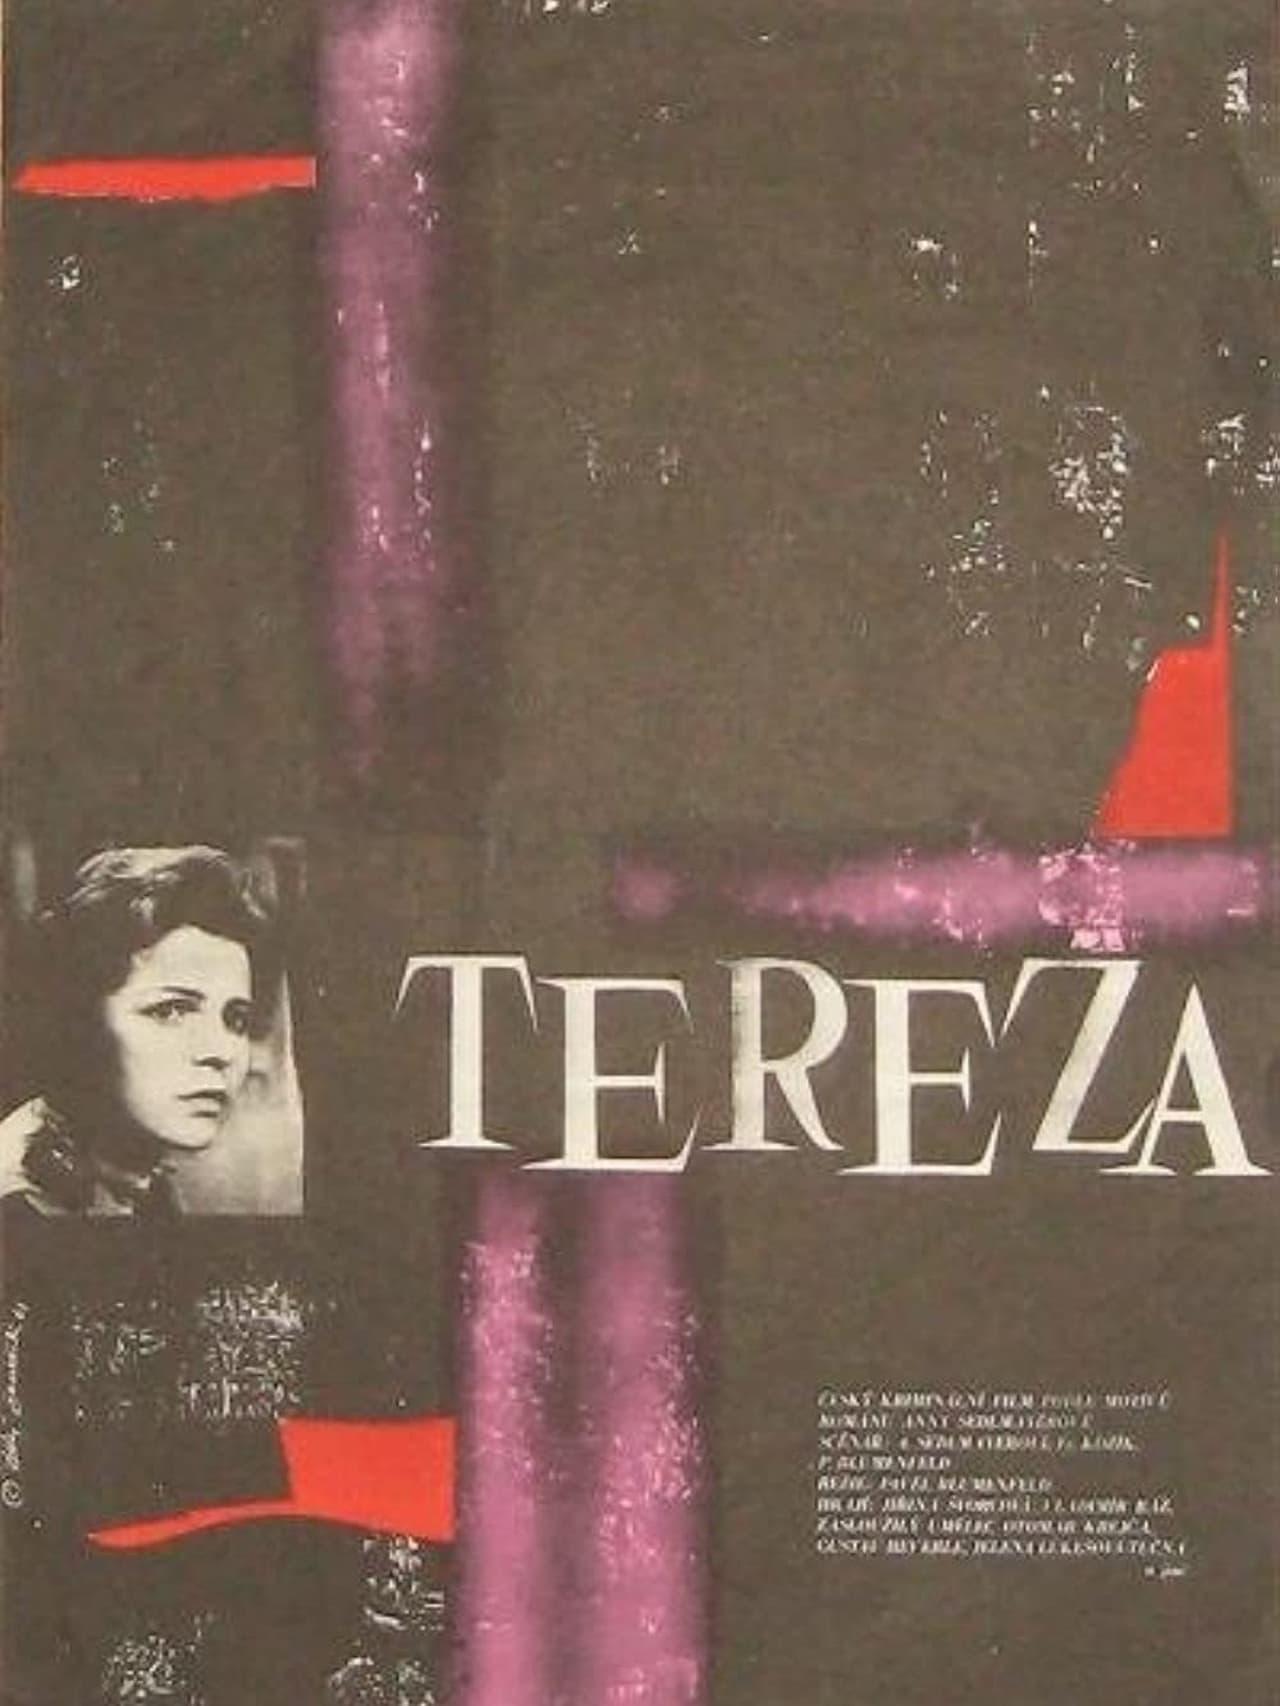 Tereza poster